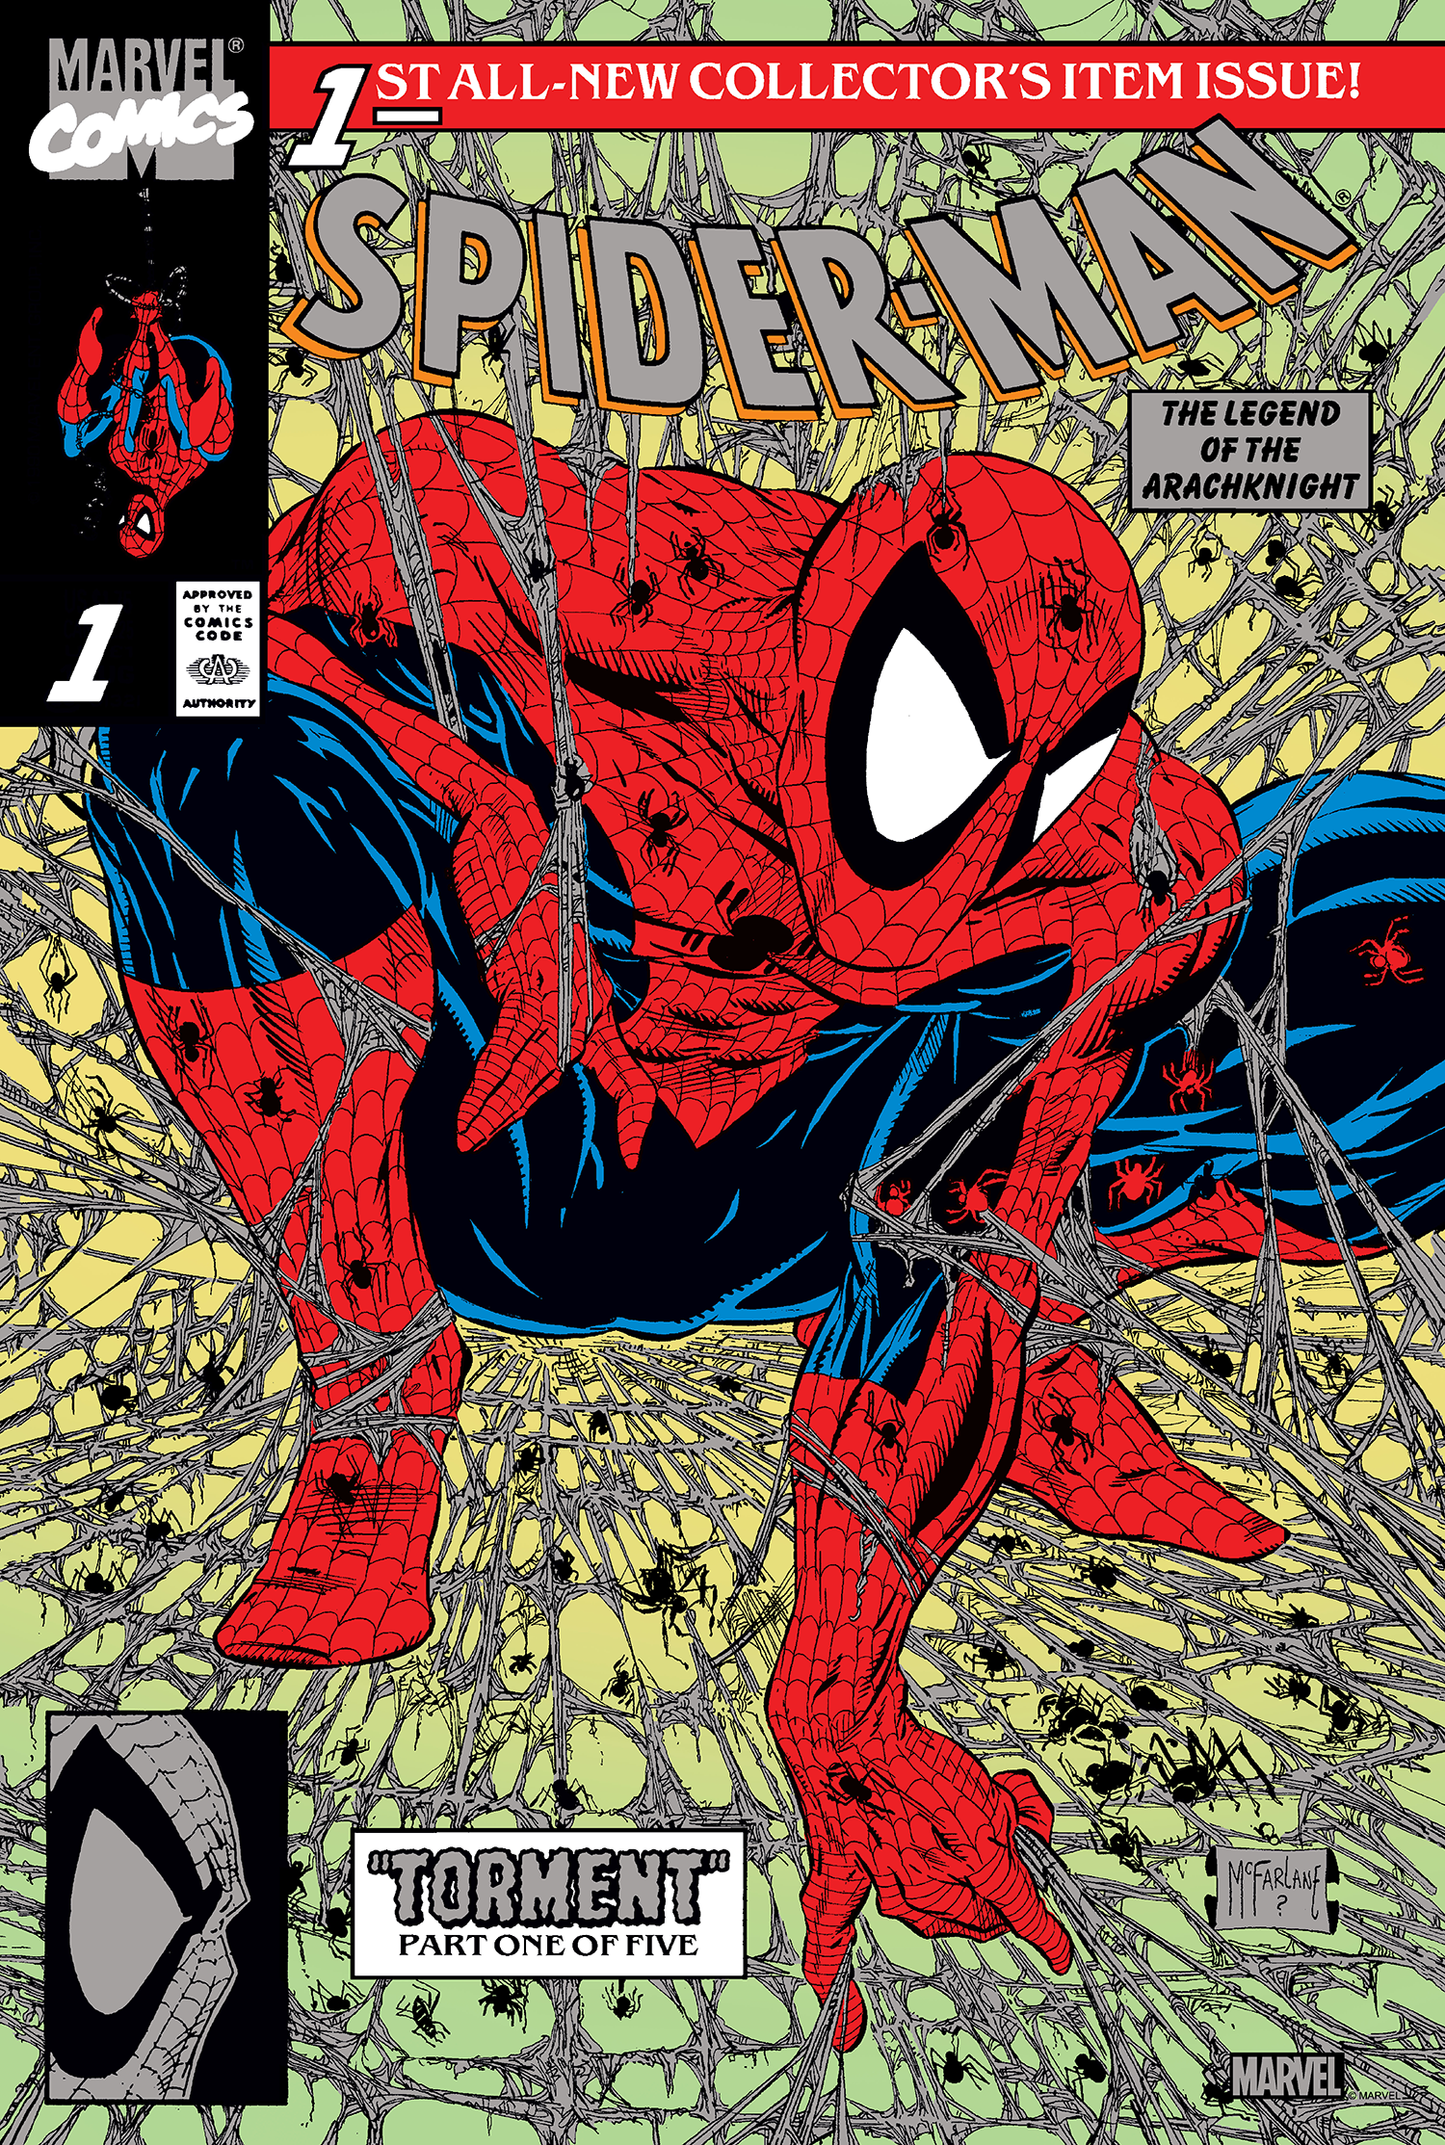 Todd McFarlane "Spider-Man #1" Platinum Variant